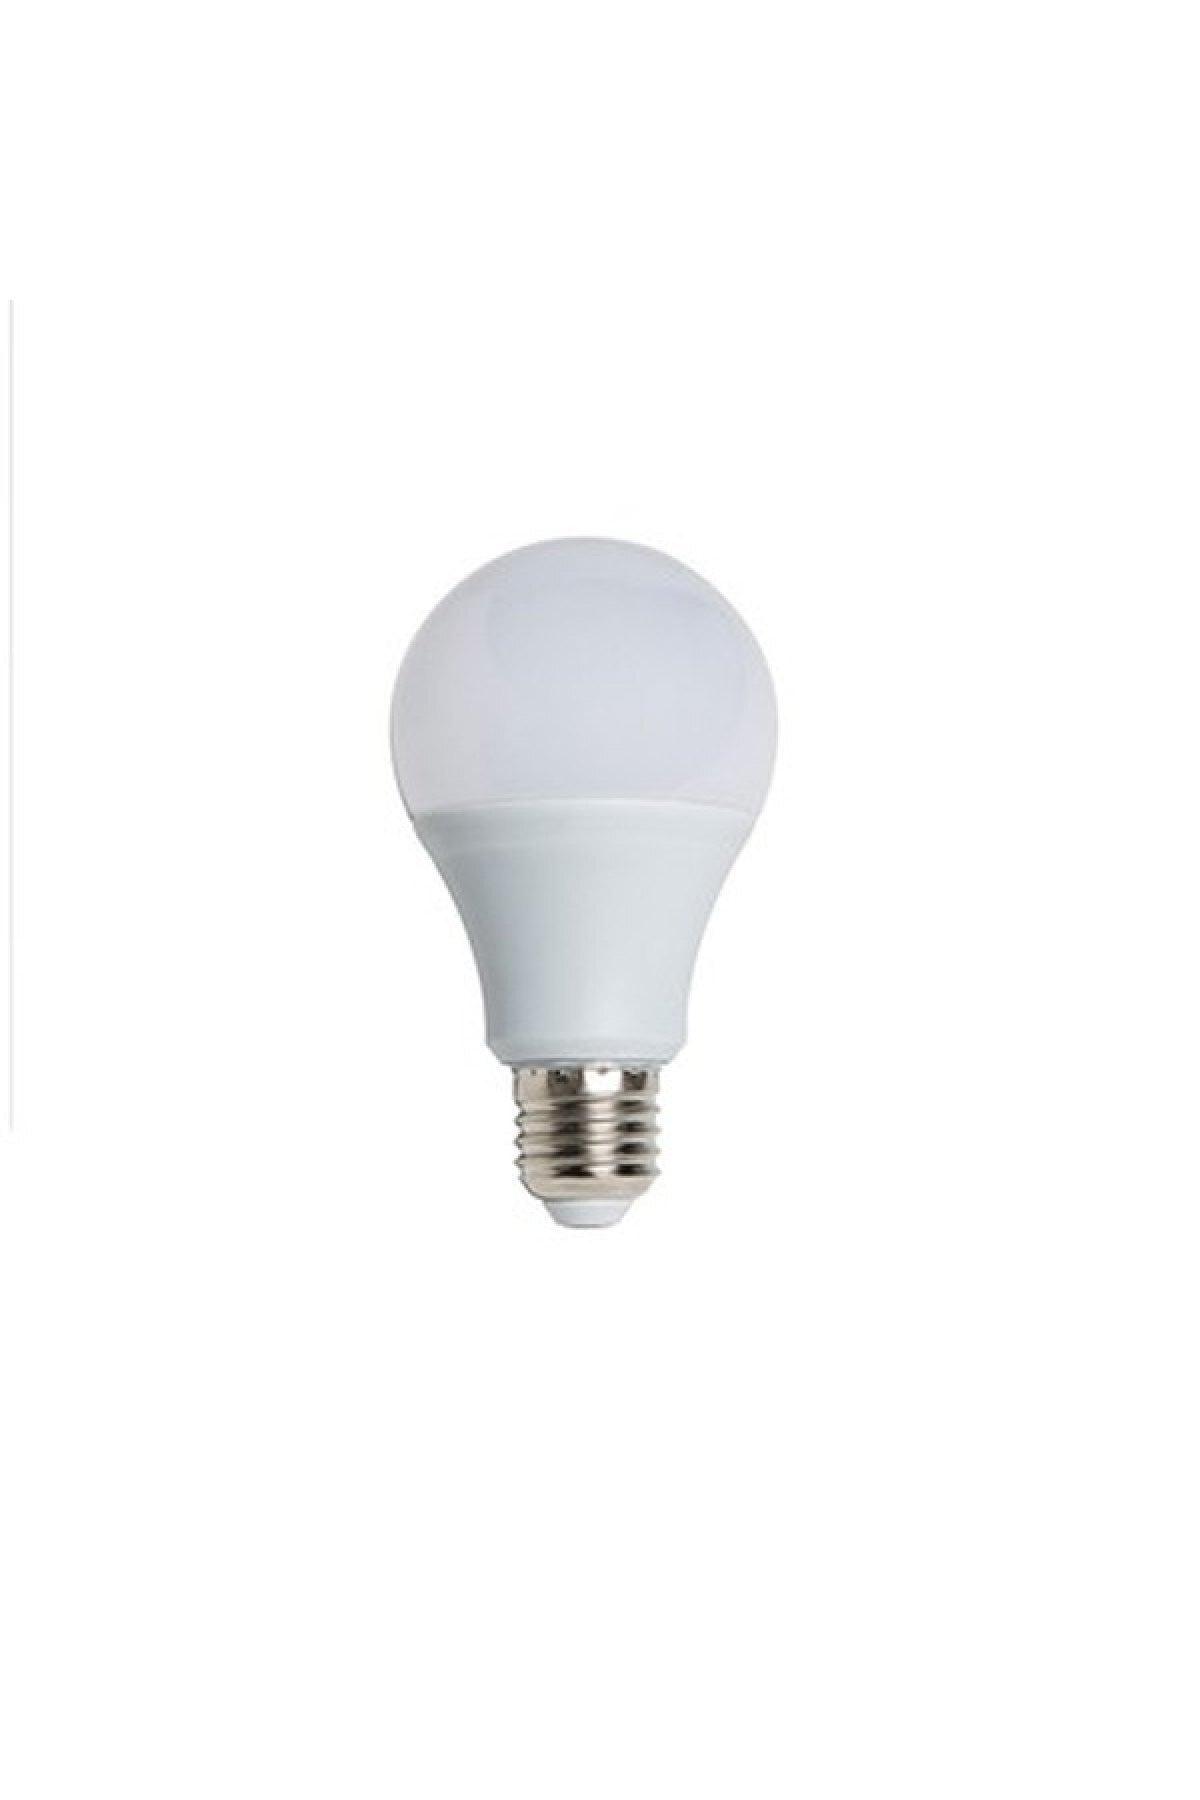 10 Pack 8.6 W Light Led Bulb